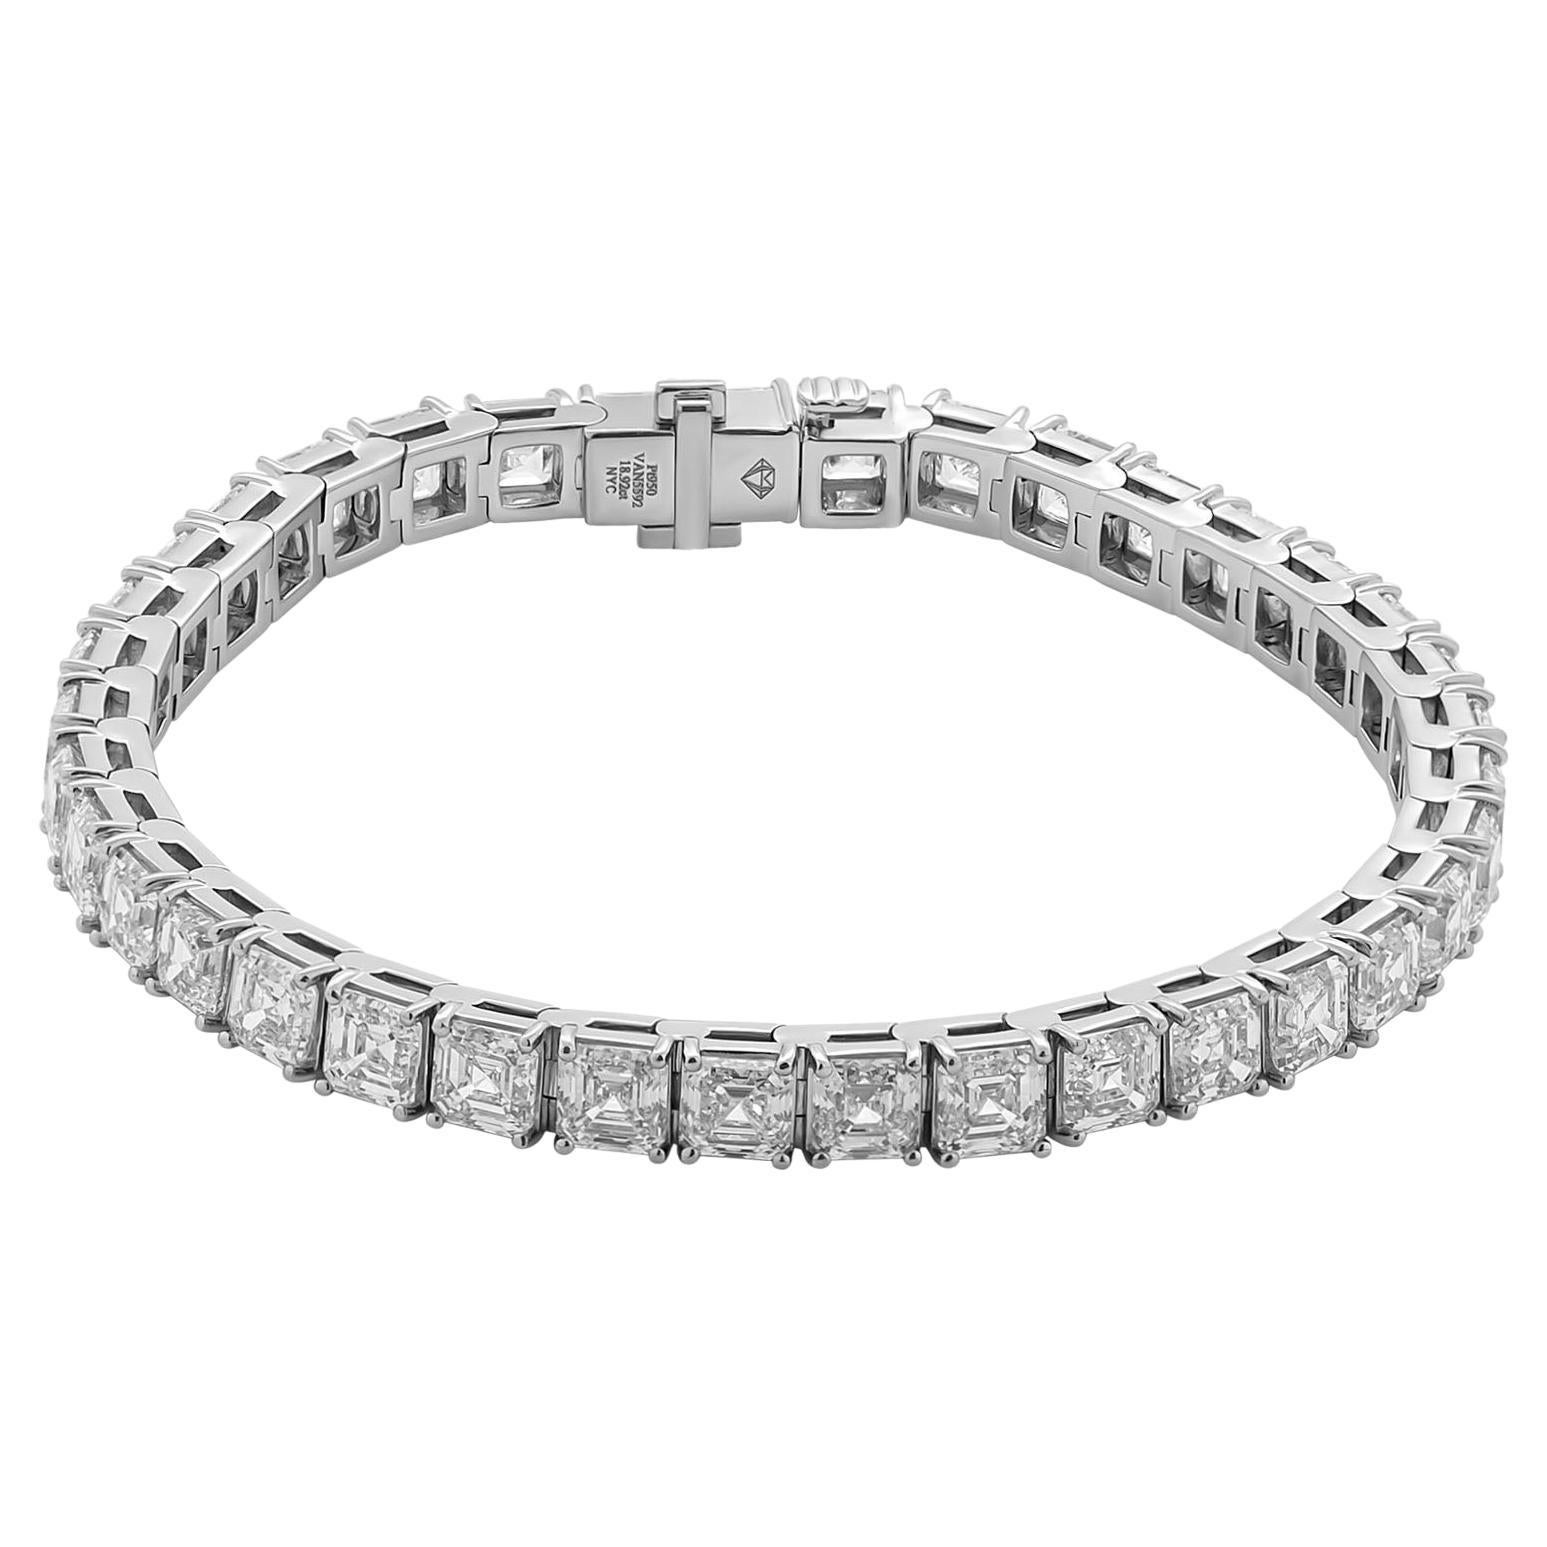 Tennis Bracelet with GIA Certified Asscher Cut Diamonds in Platinum 0.50ct Each